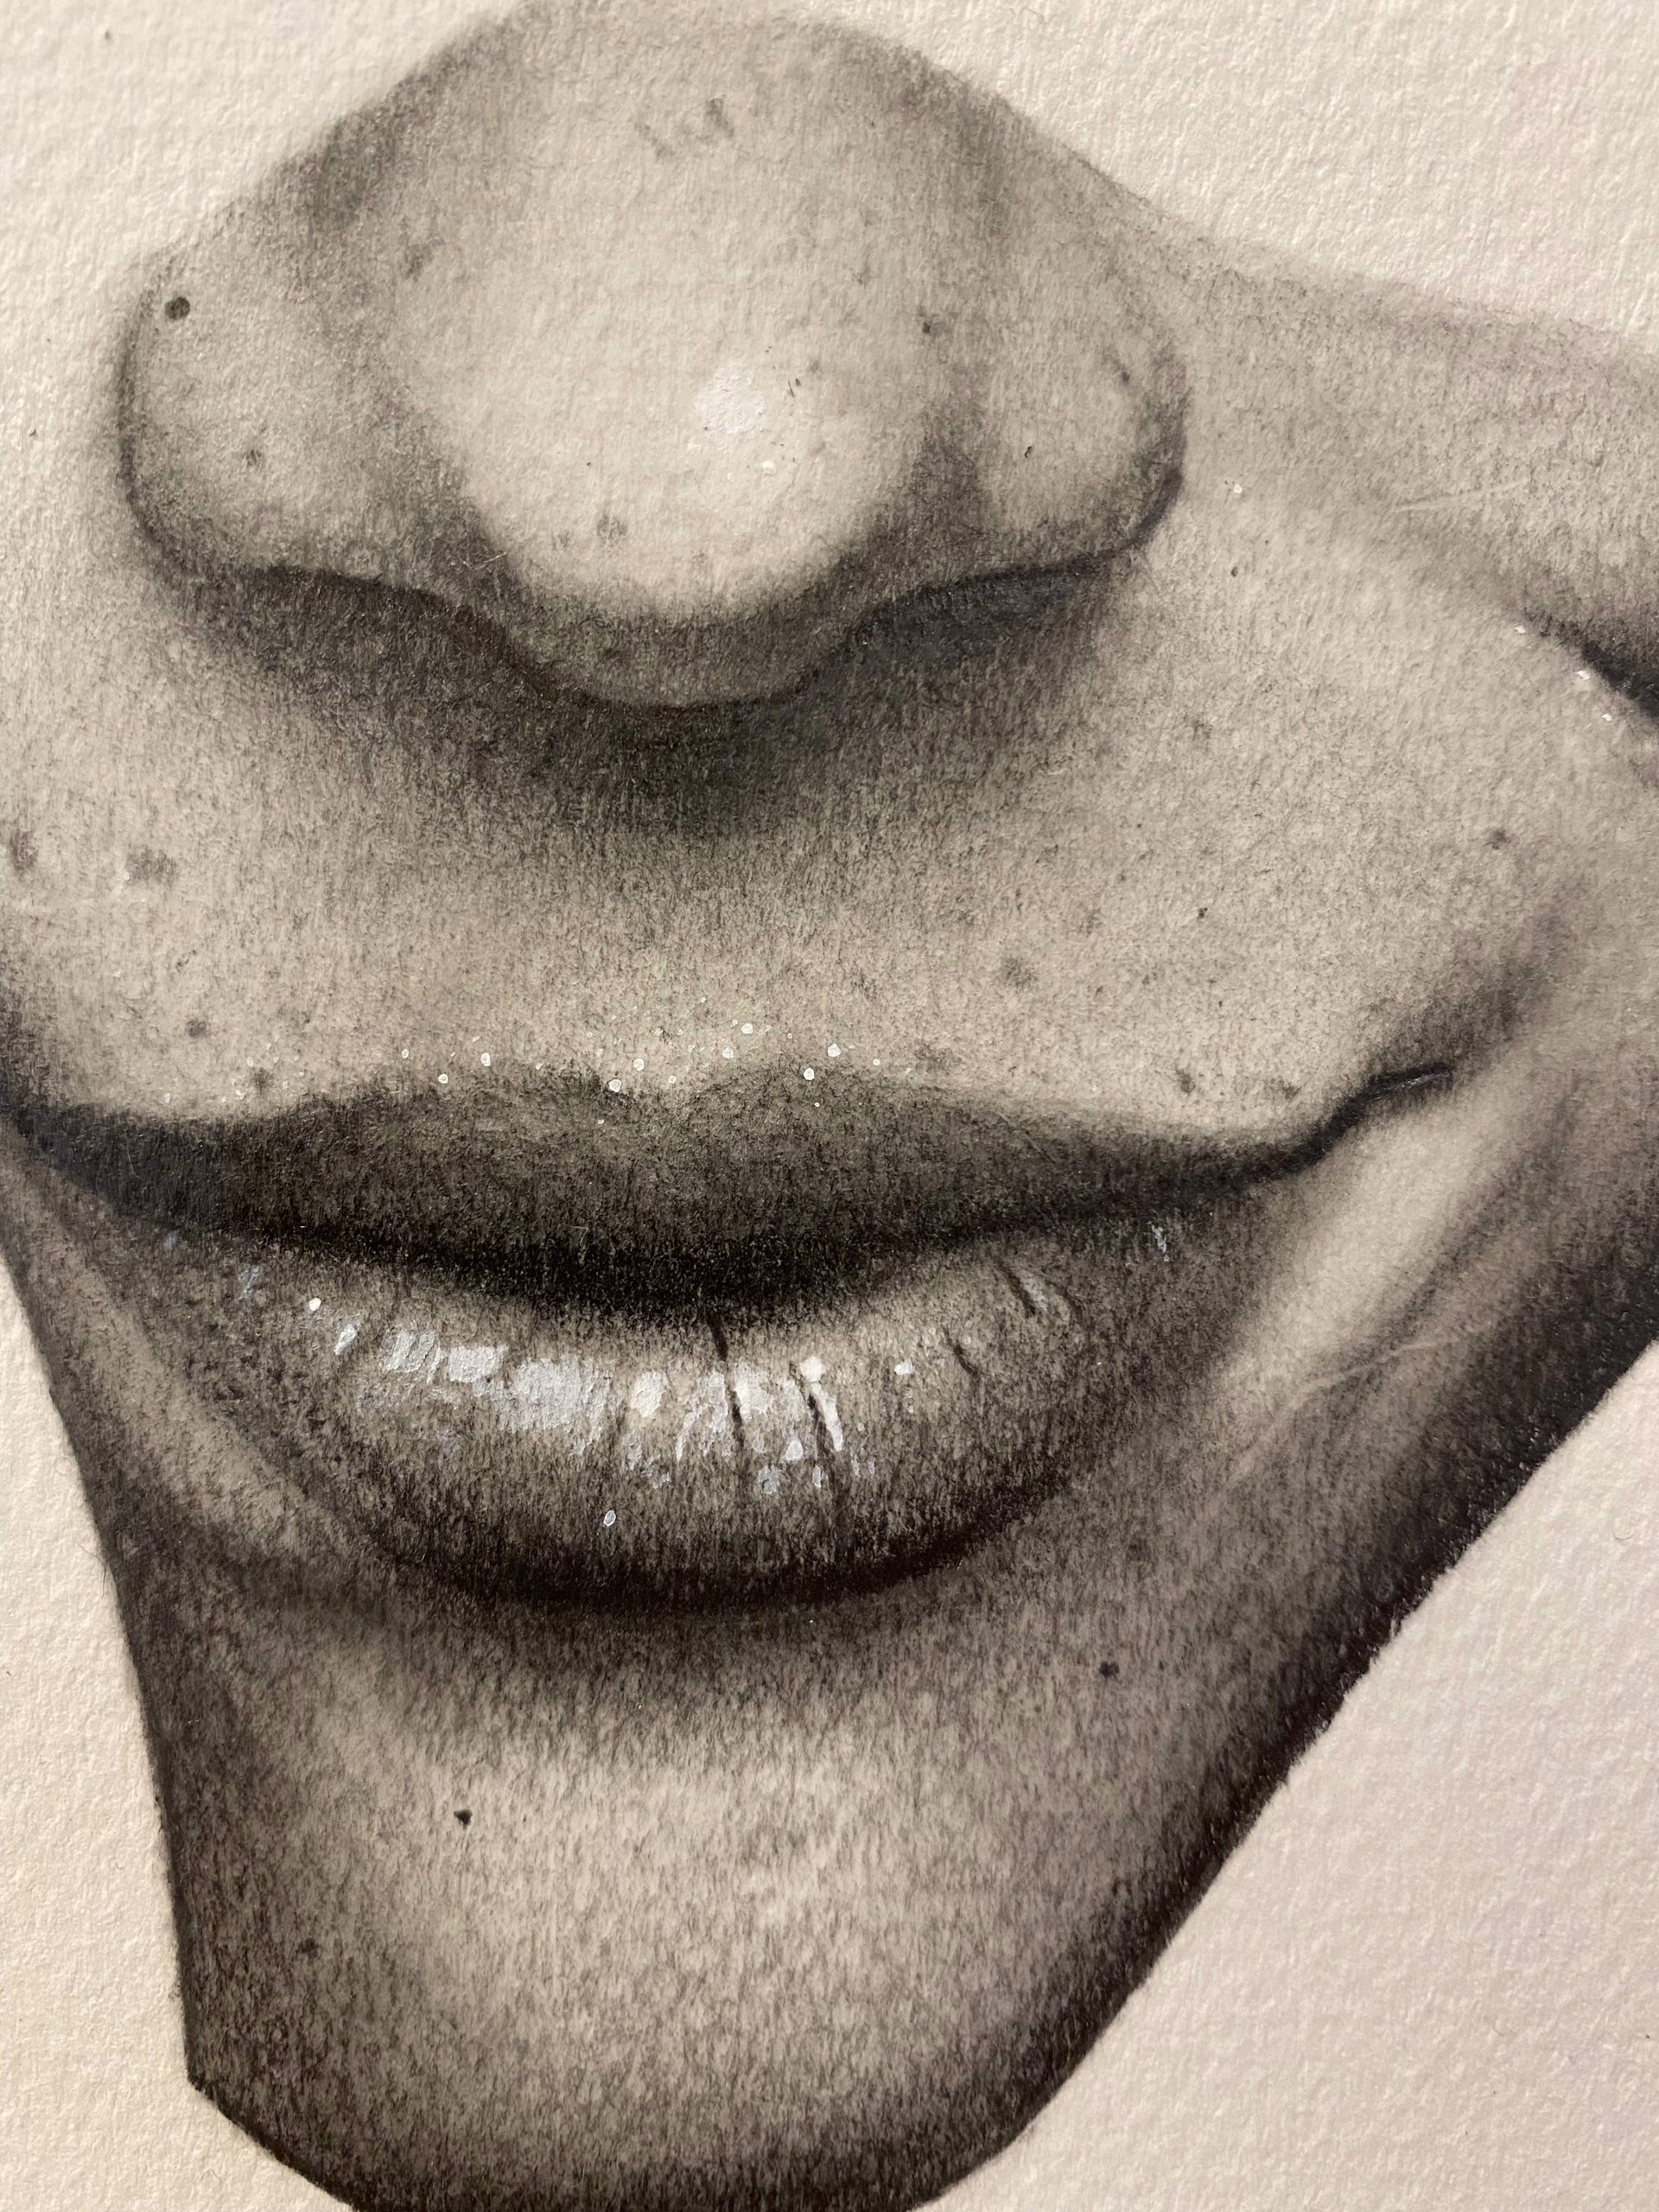 Lips Study #1 by Francisco Javier